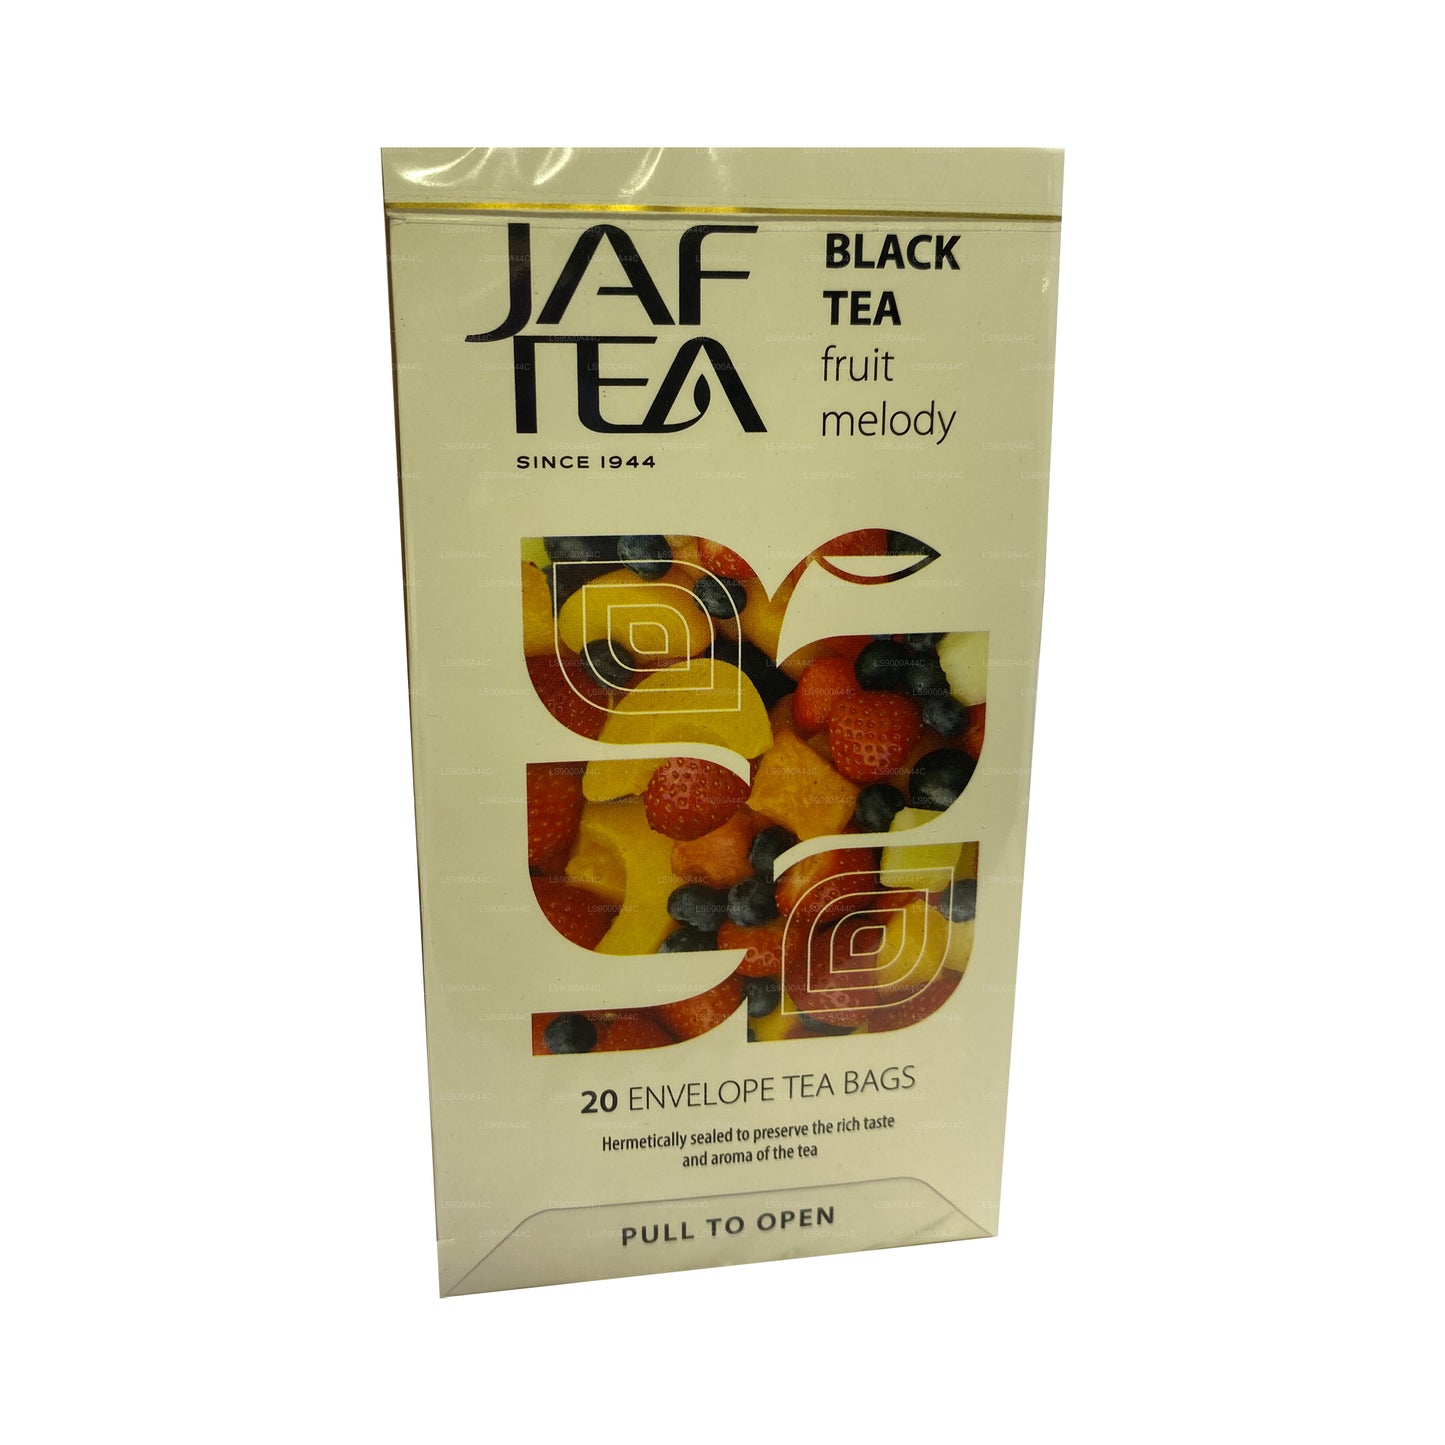 Jaf Tea Pure Fruits Collection Black Tea Melody (30 g) 20 bustine di tè